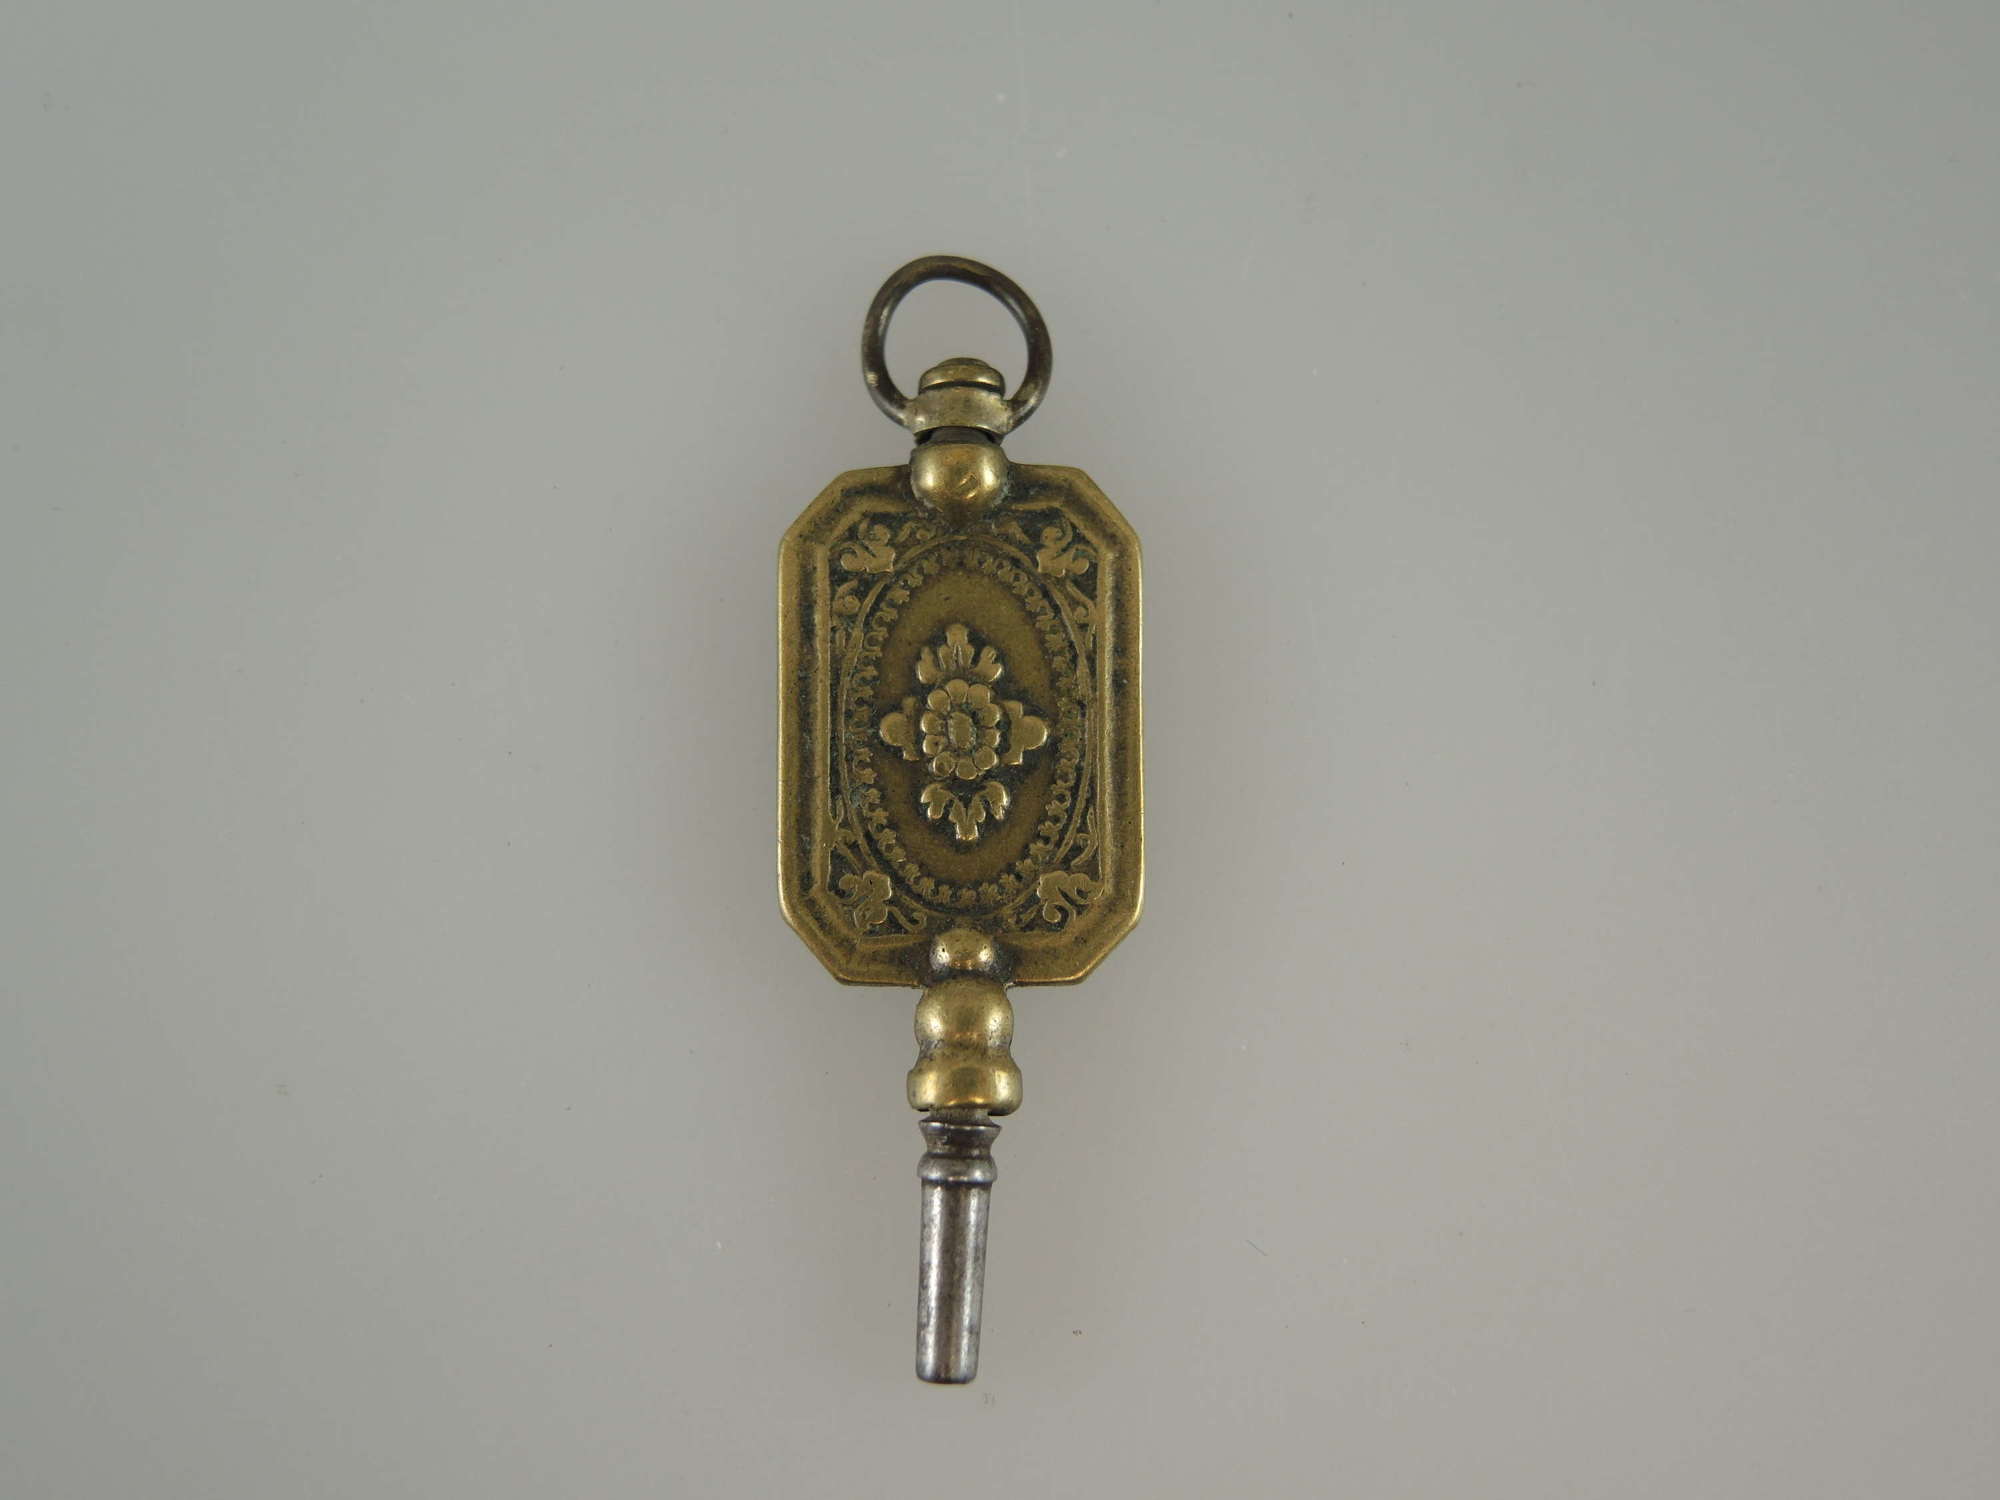 Early French pocket watch key c1810